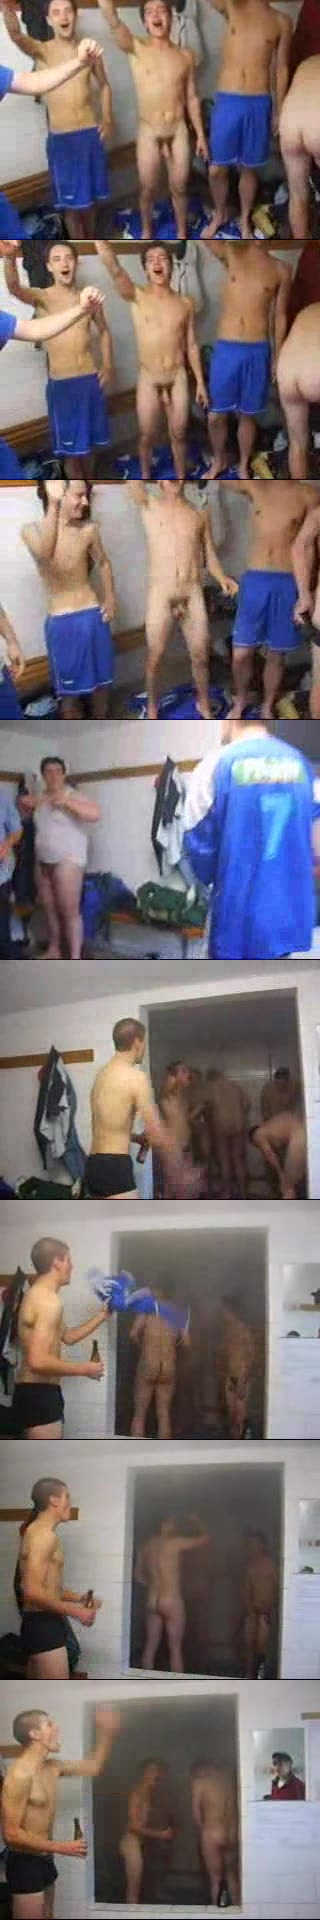 french footballers naked in locker room